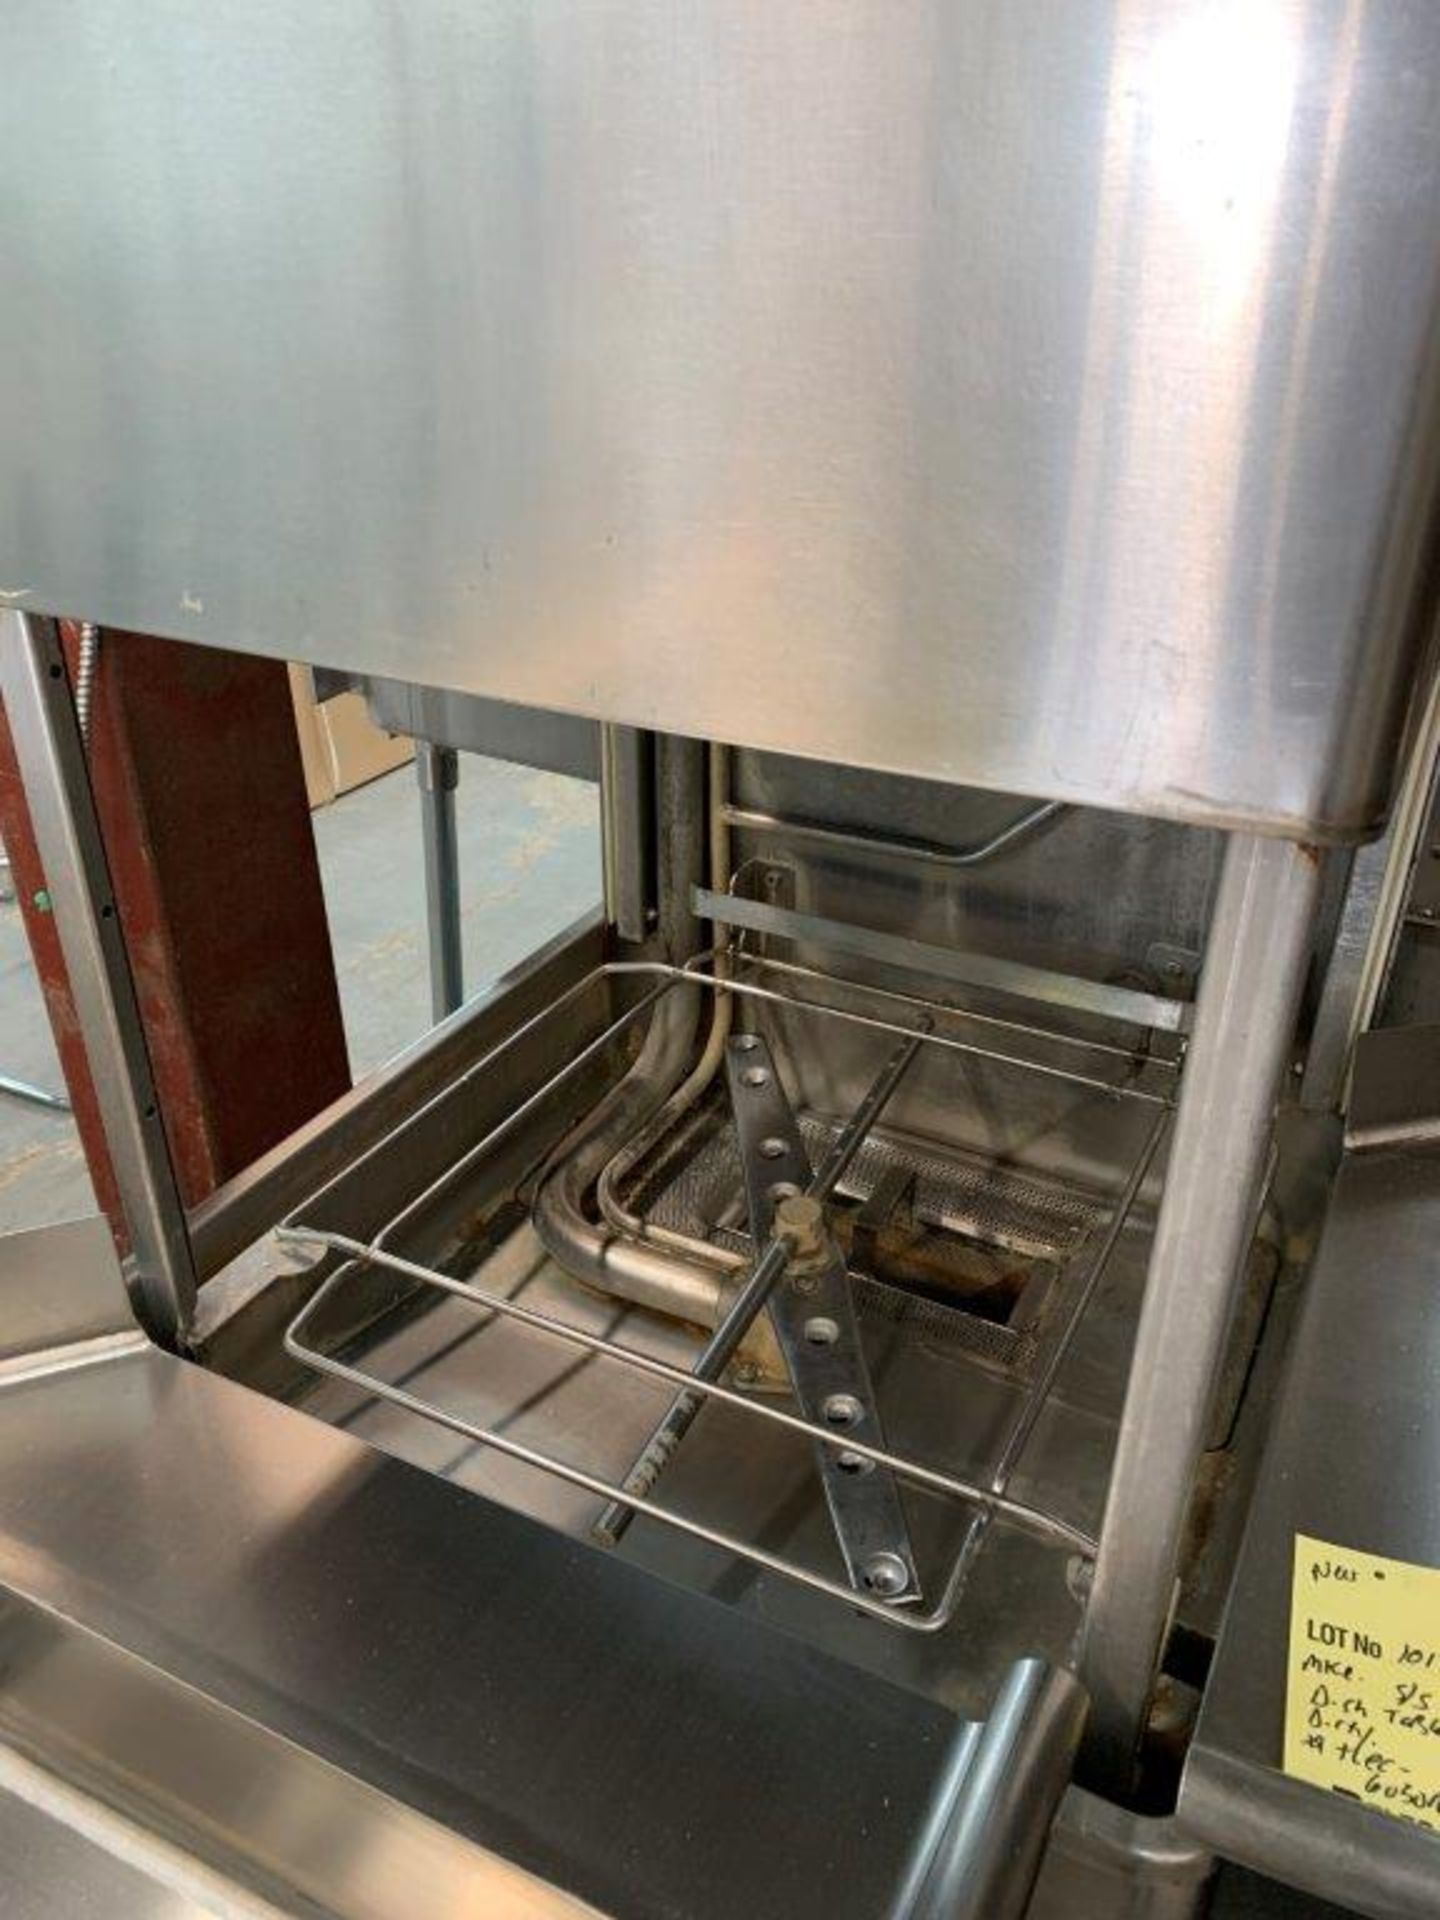 Beau Lave vaisselle commerciale HOBART # AM-15 -AM select - moderne - Image 4 of 8